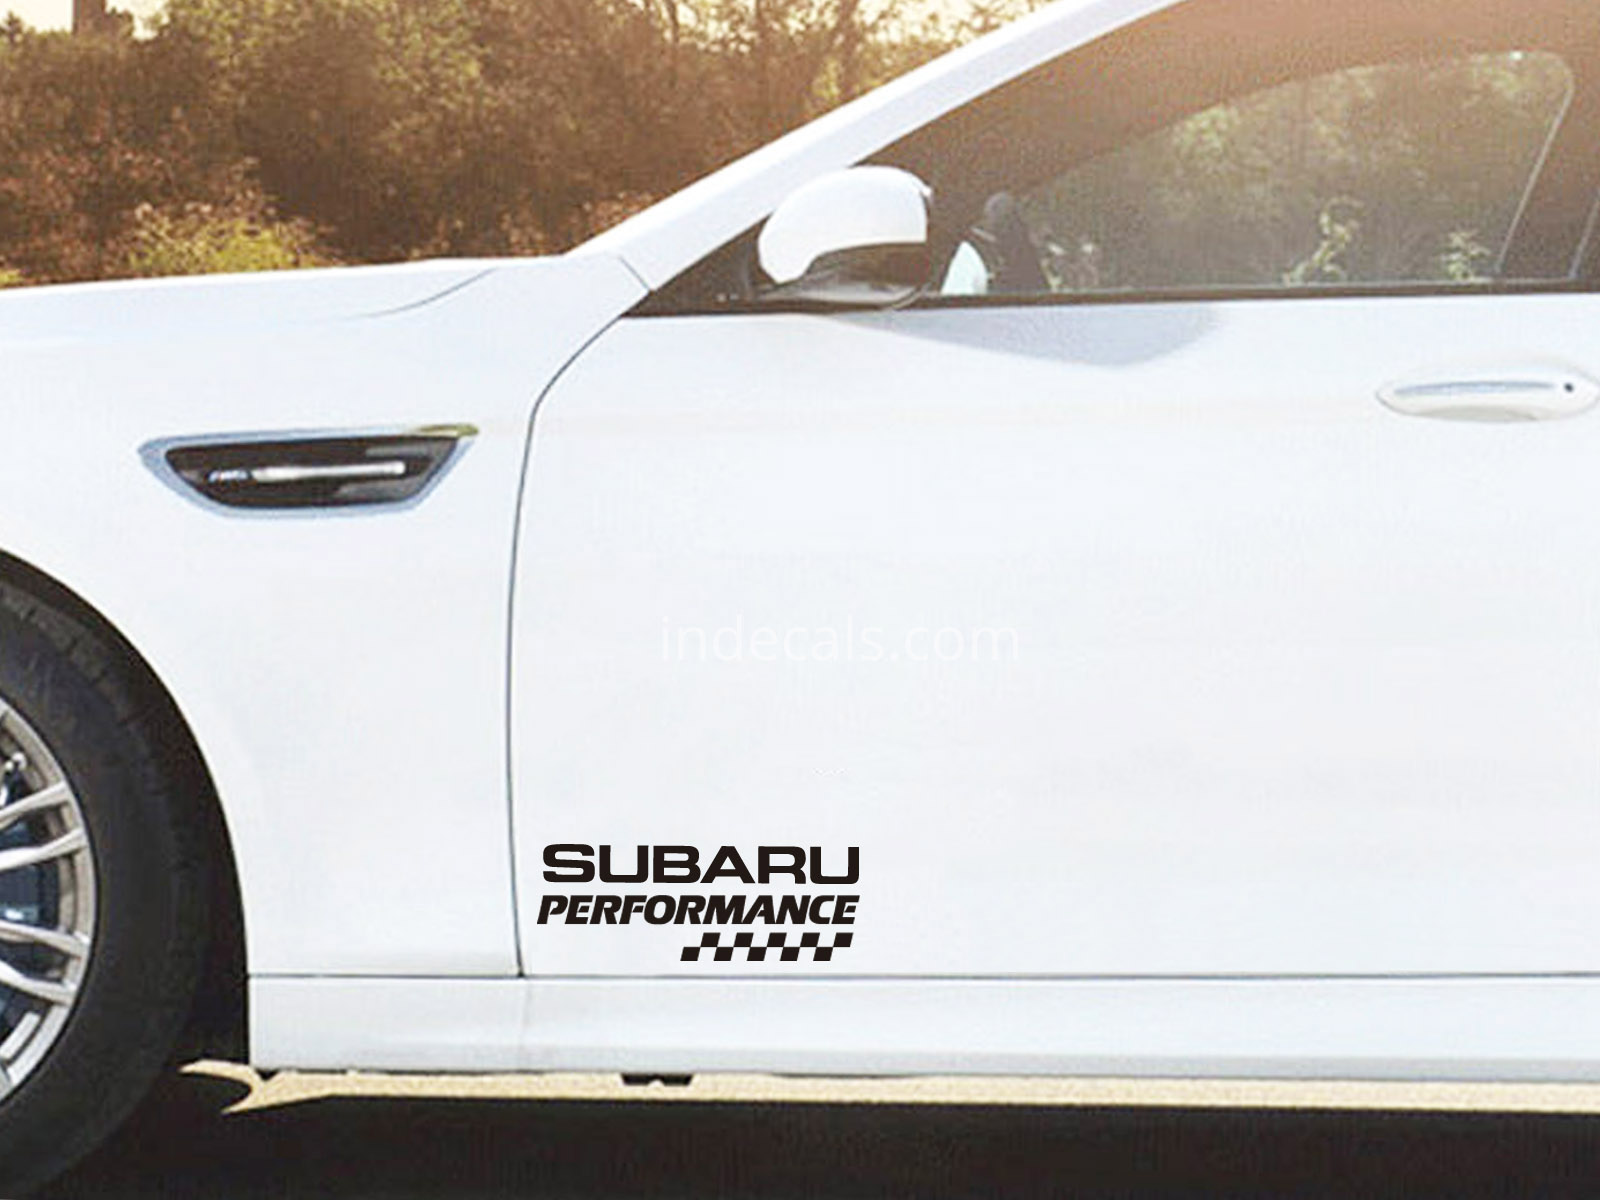 2 x Subaru Performance Stickers for Doors - Black